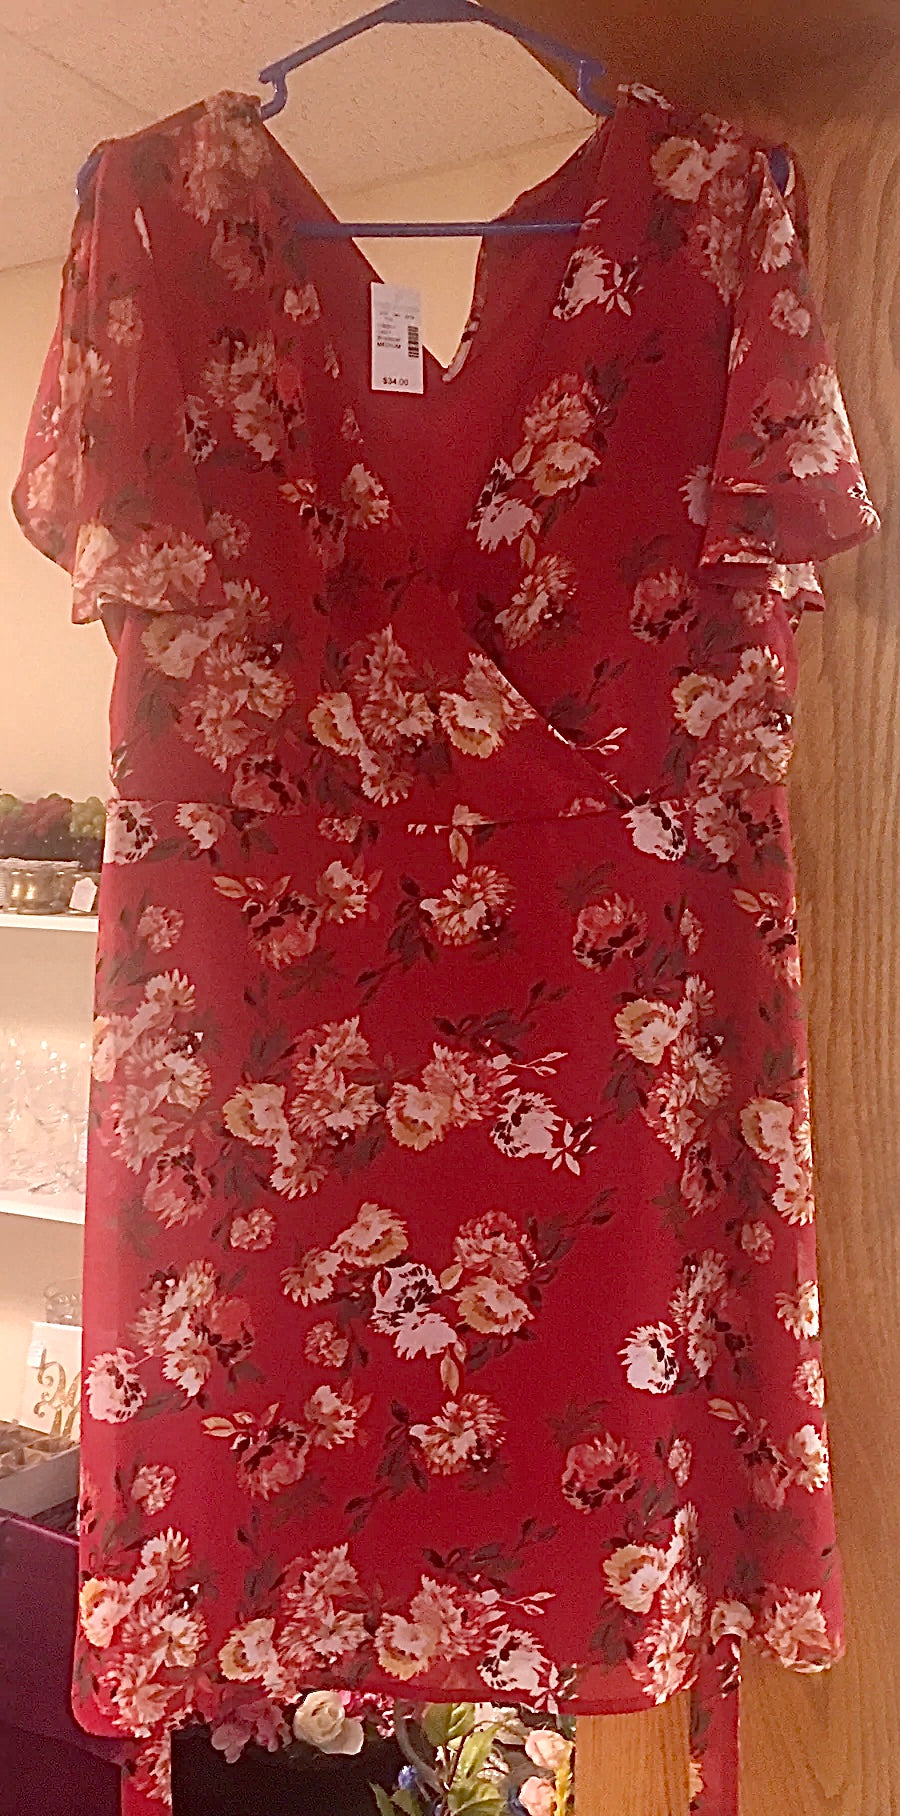 SMIT200-BO Red Floral Dress. Medium